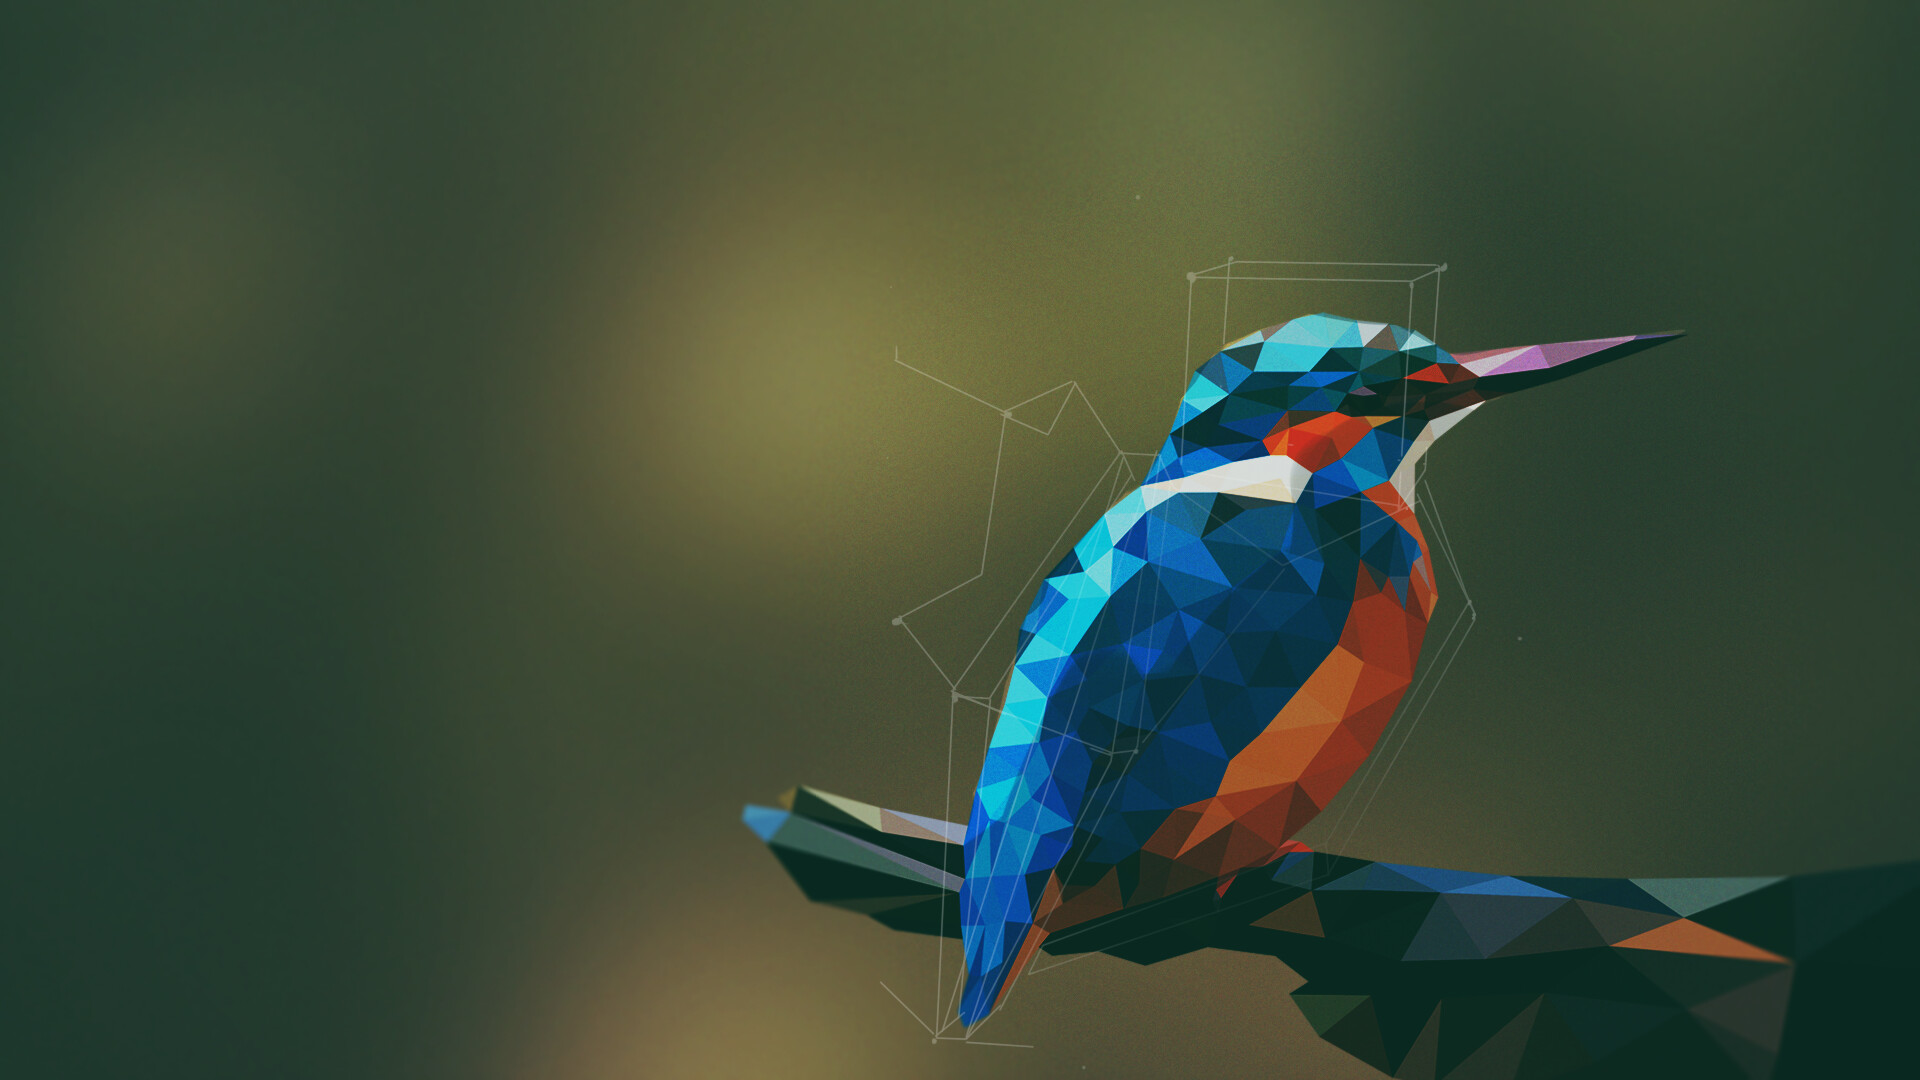 Geometric Animal: Birds, Kingfisher, Low Poly Art, Simple Drawing, Abstract Polygonal. 1920x1080 Full HD Wallpaper.